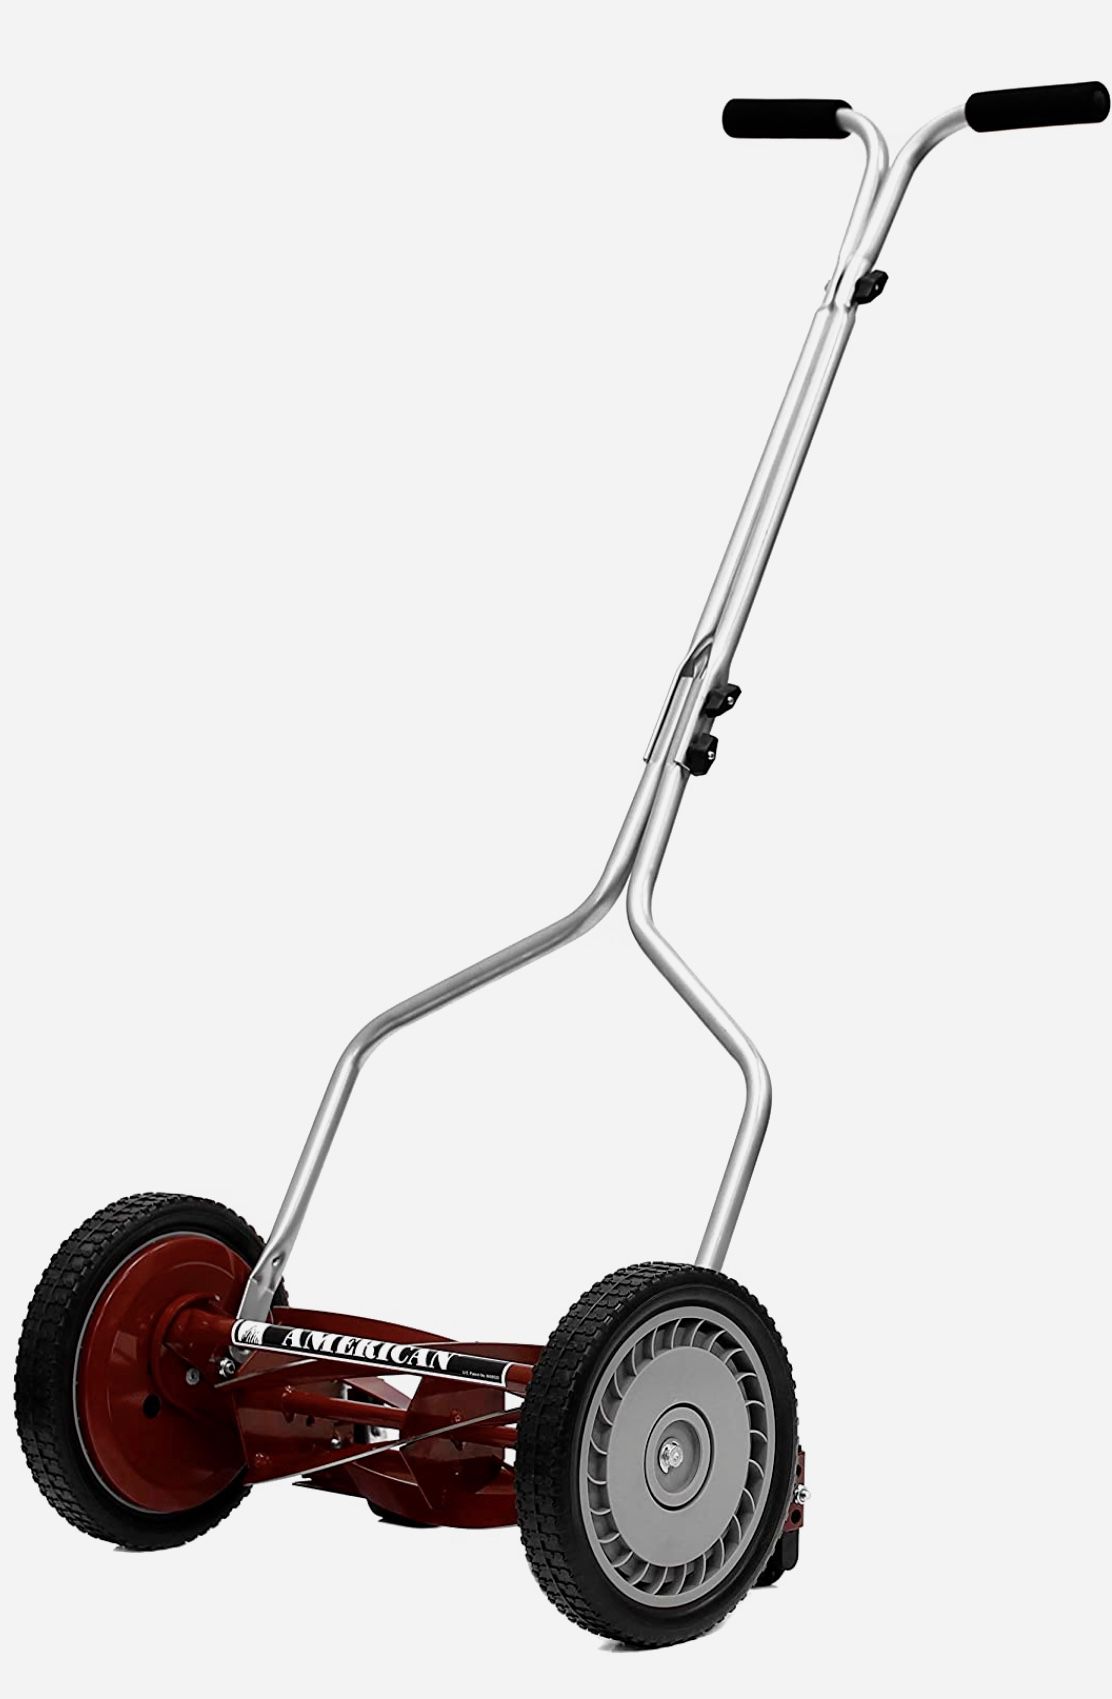 Manual Lawn Mower 14-Inch 5-Blade Push Reel Lawn Mower, Red